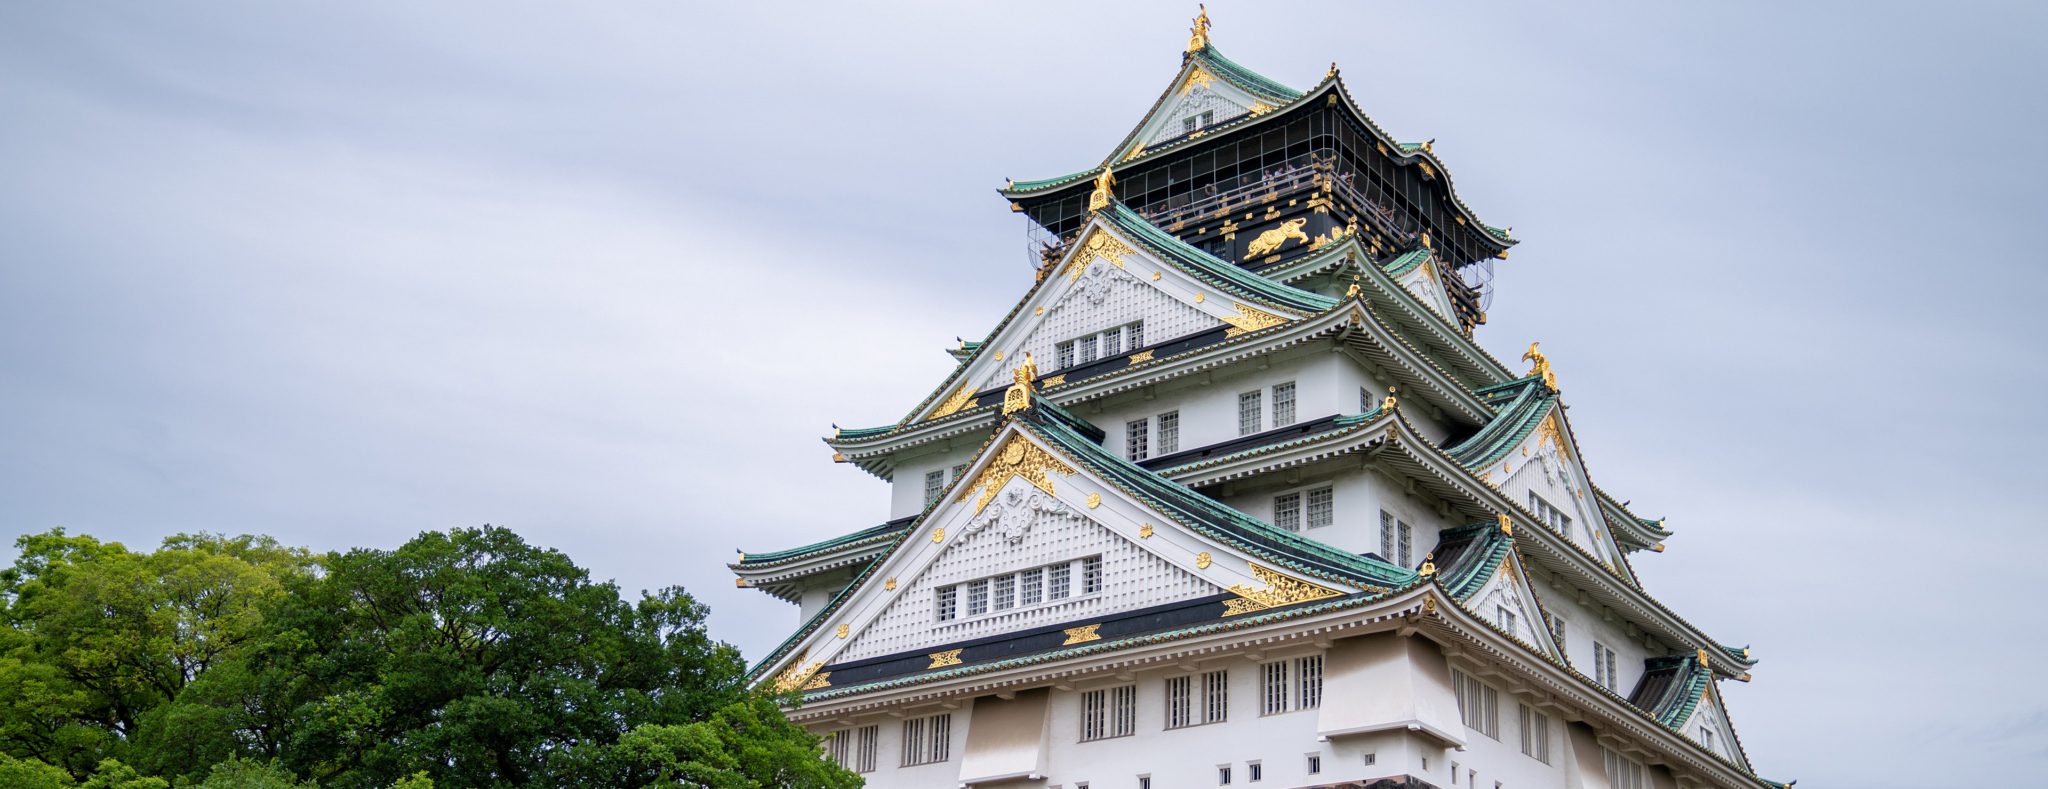 Osakas castle